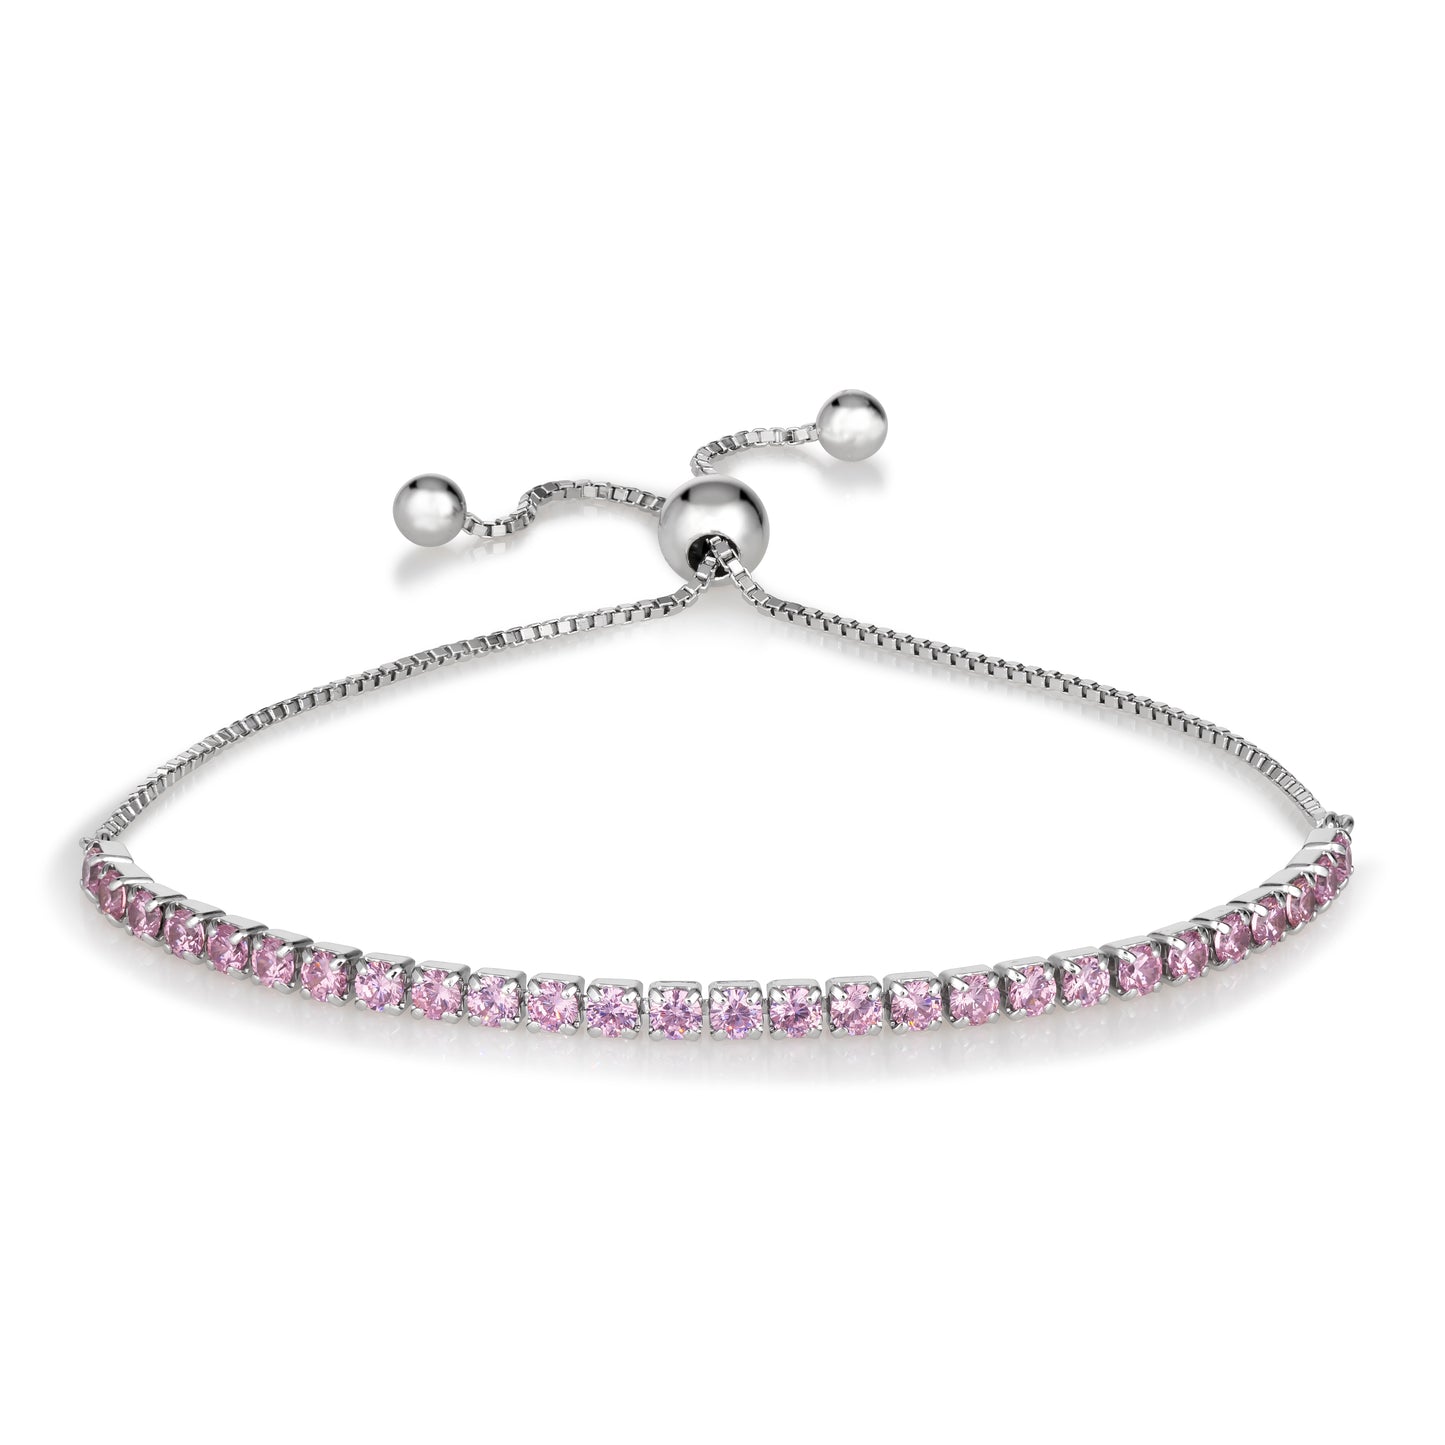 Signature Adjustable Bolo Bracelet in Pink Tourmaline